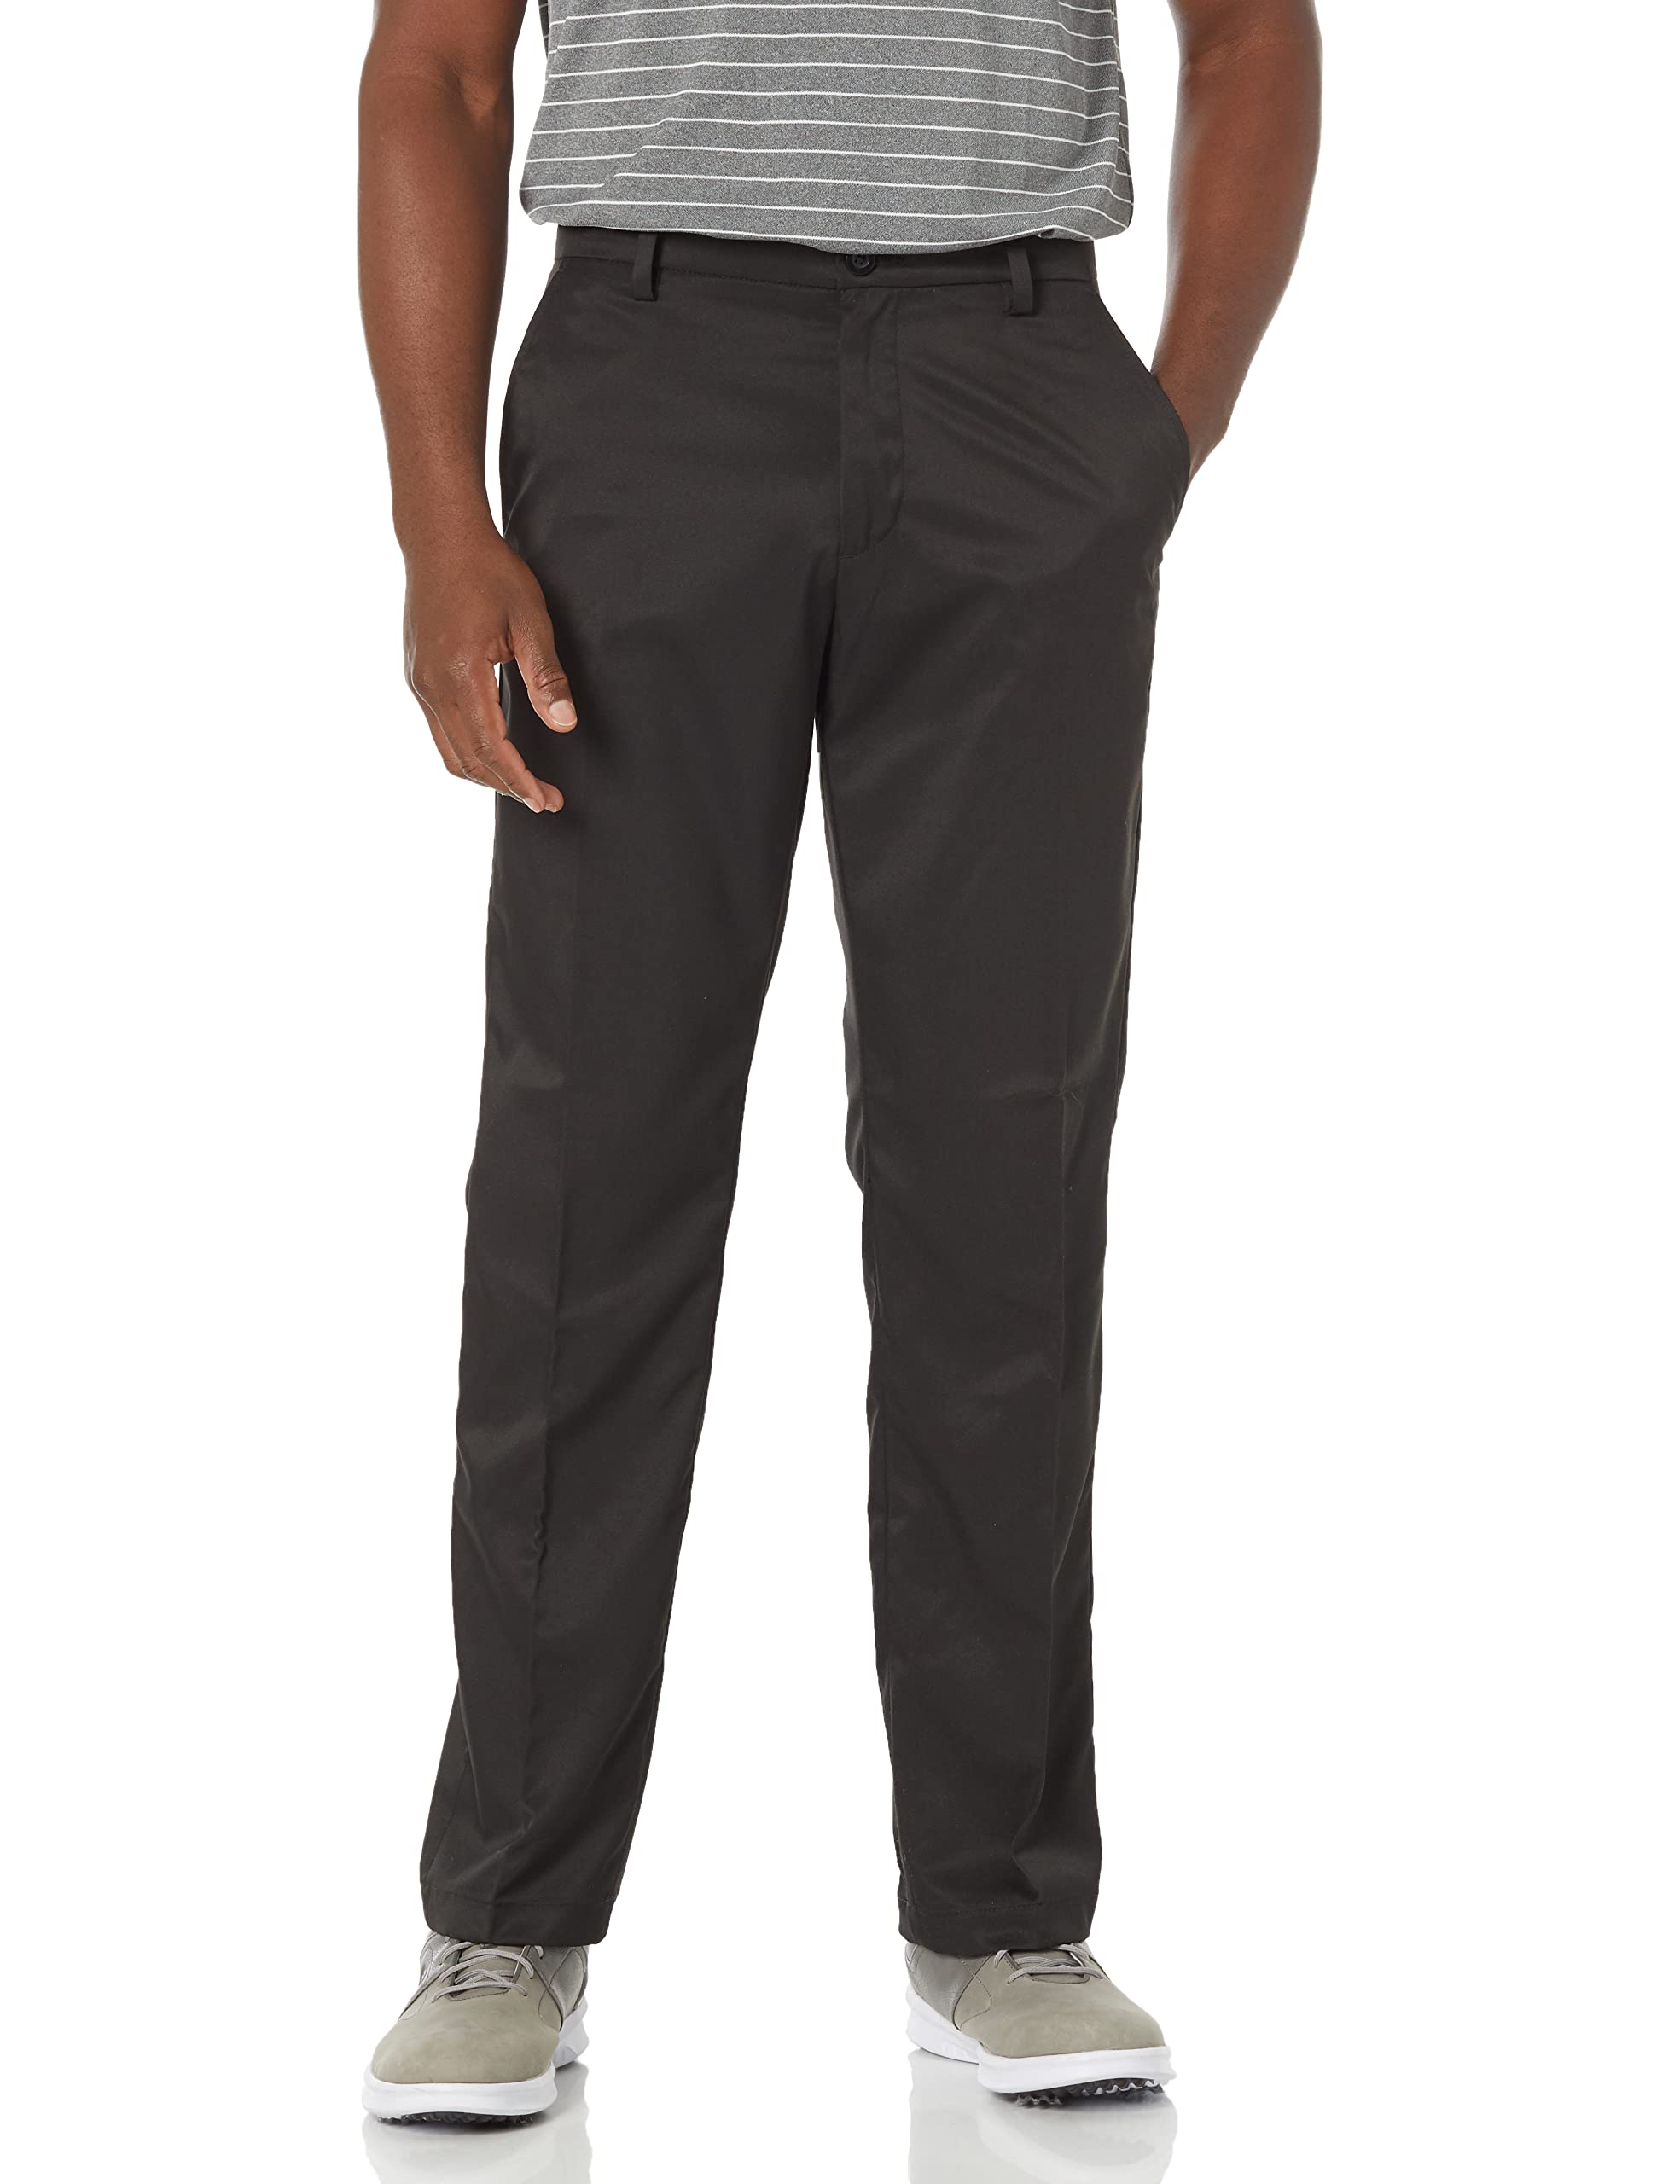 Black Ultra Slim Fit Pants – Upscale Men's Fashion